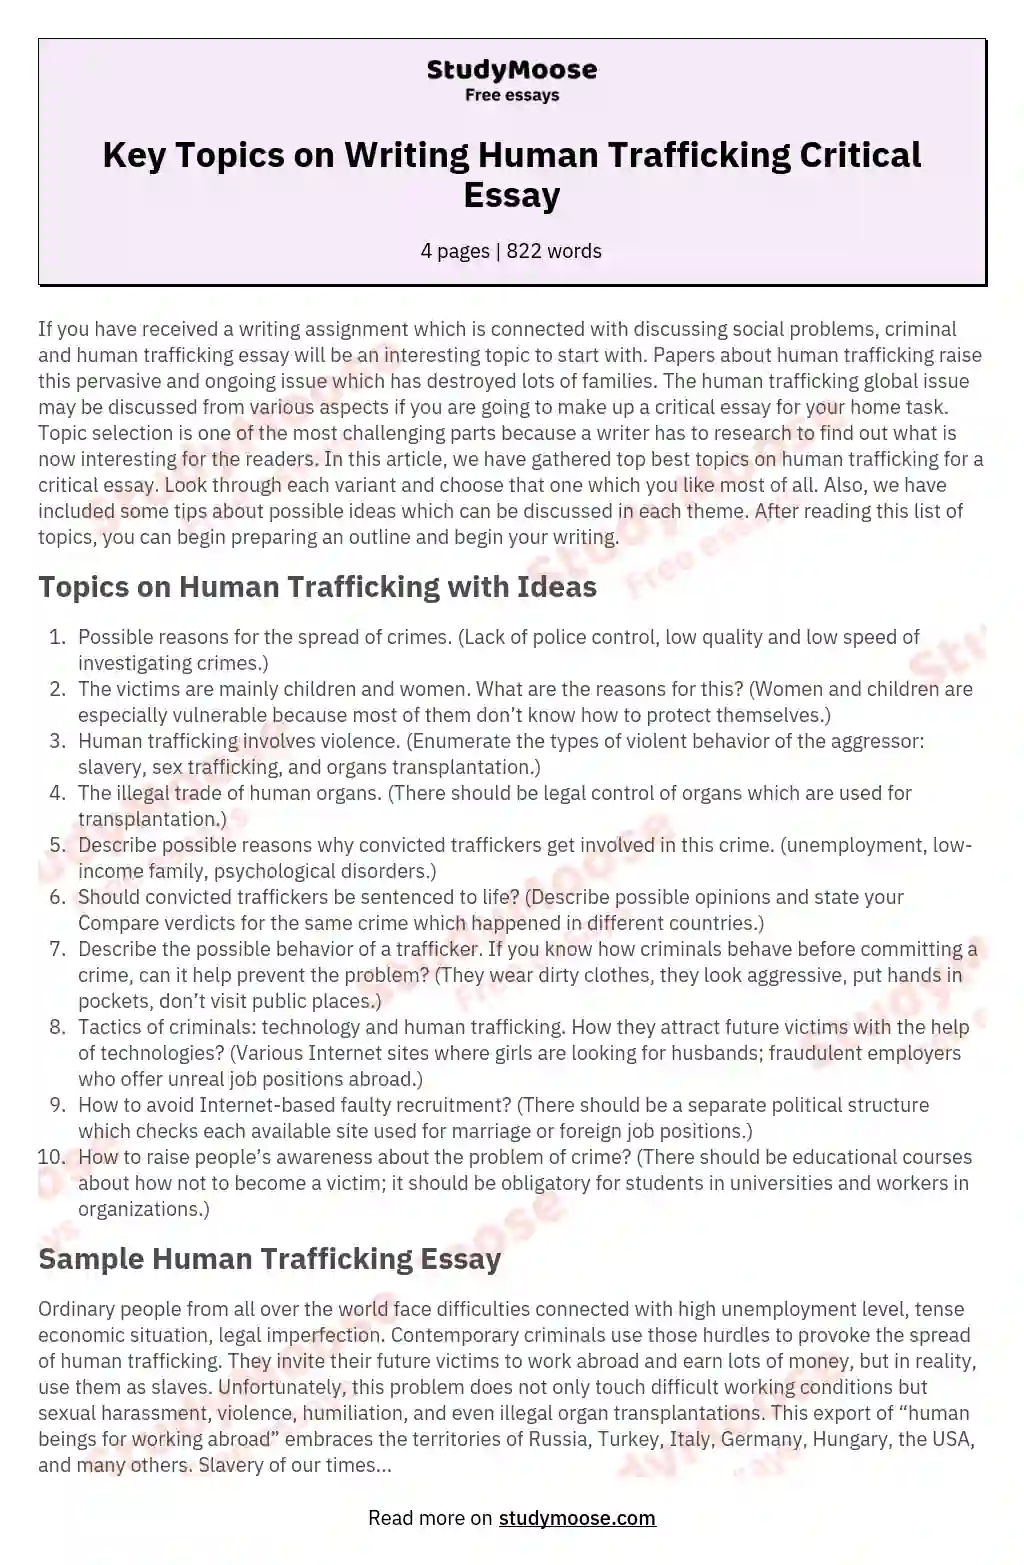 Key Topics on Writing Human Trafficking Critical Essay essay